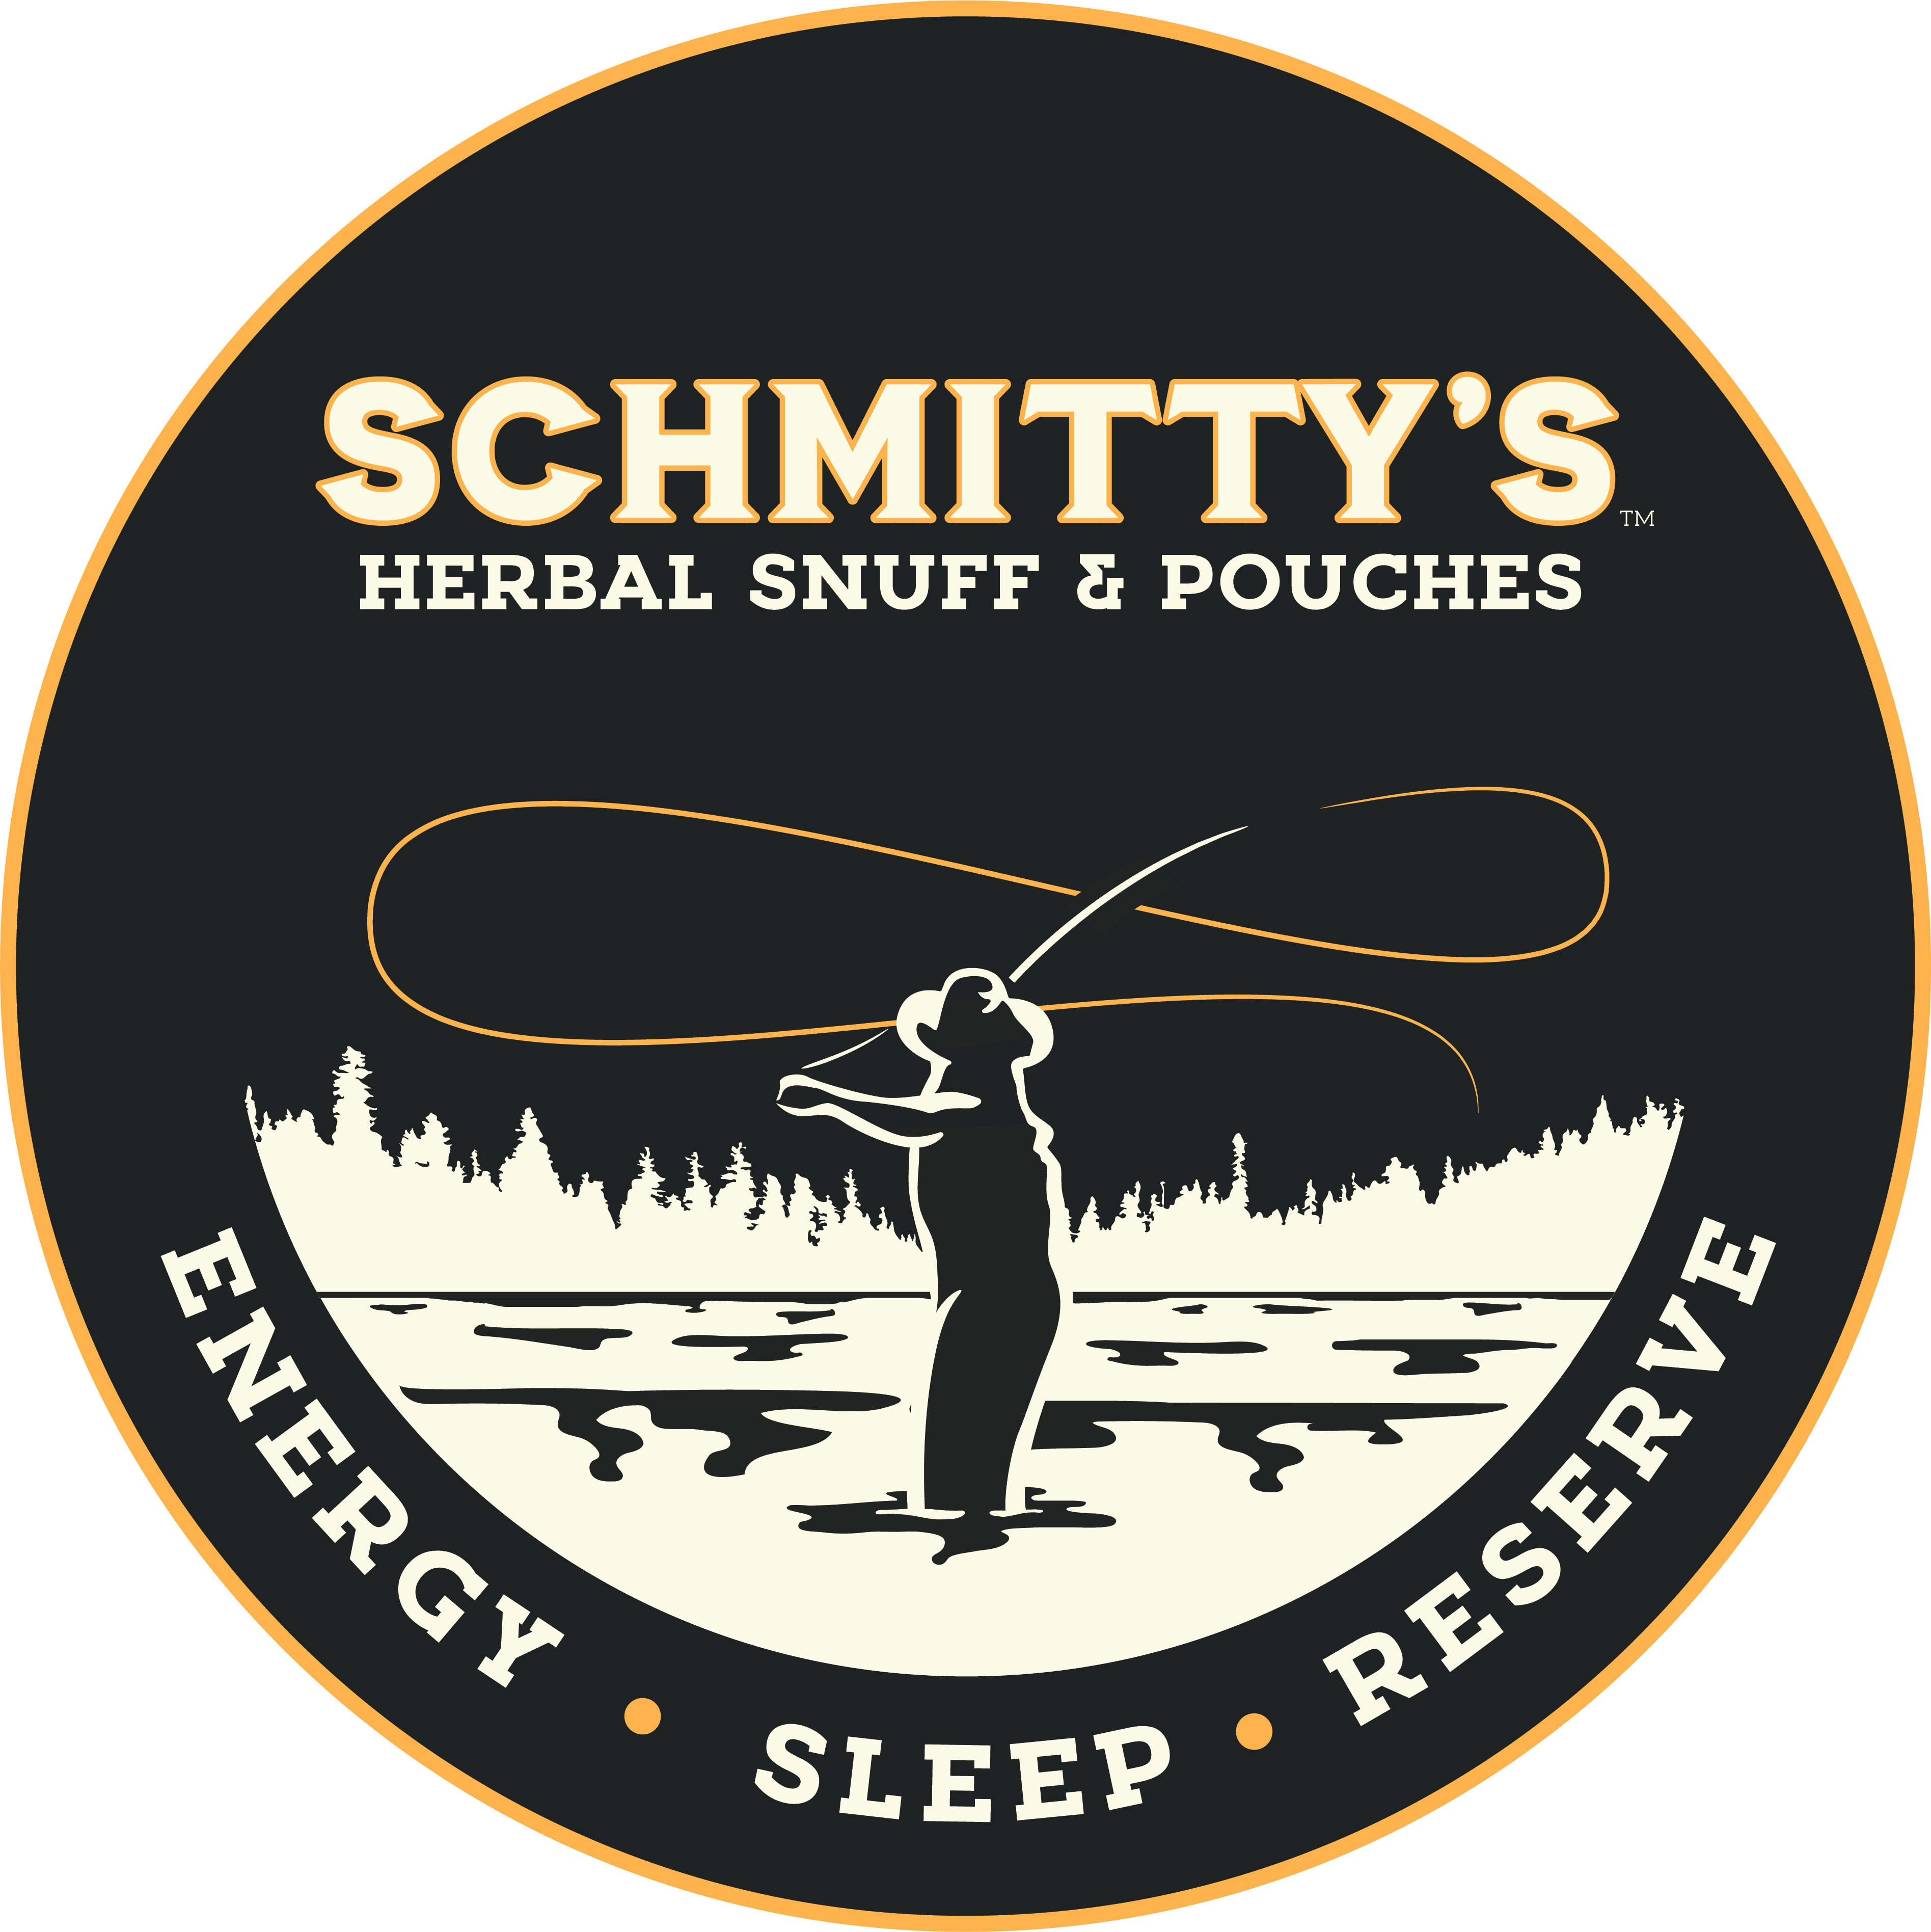 Schmitty's Herbal Snuff